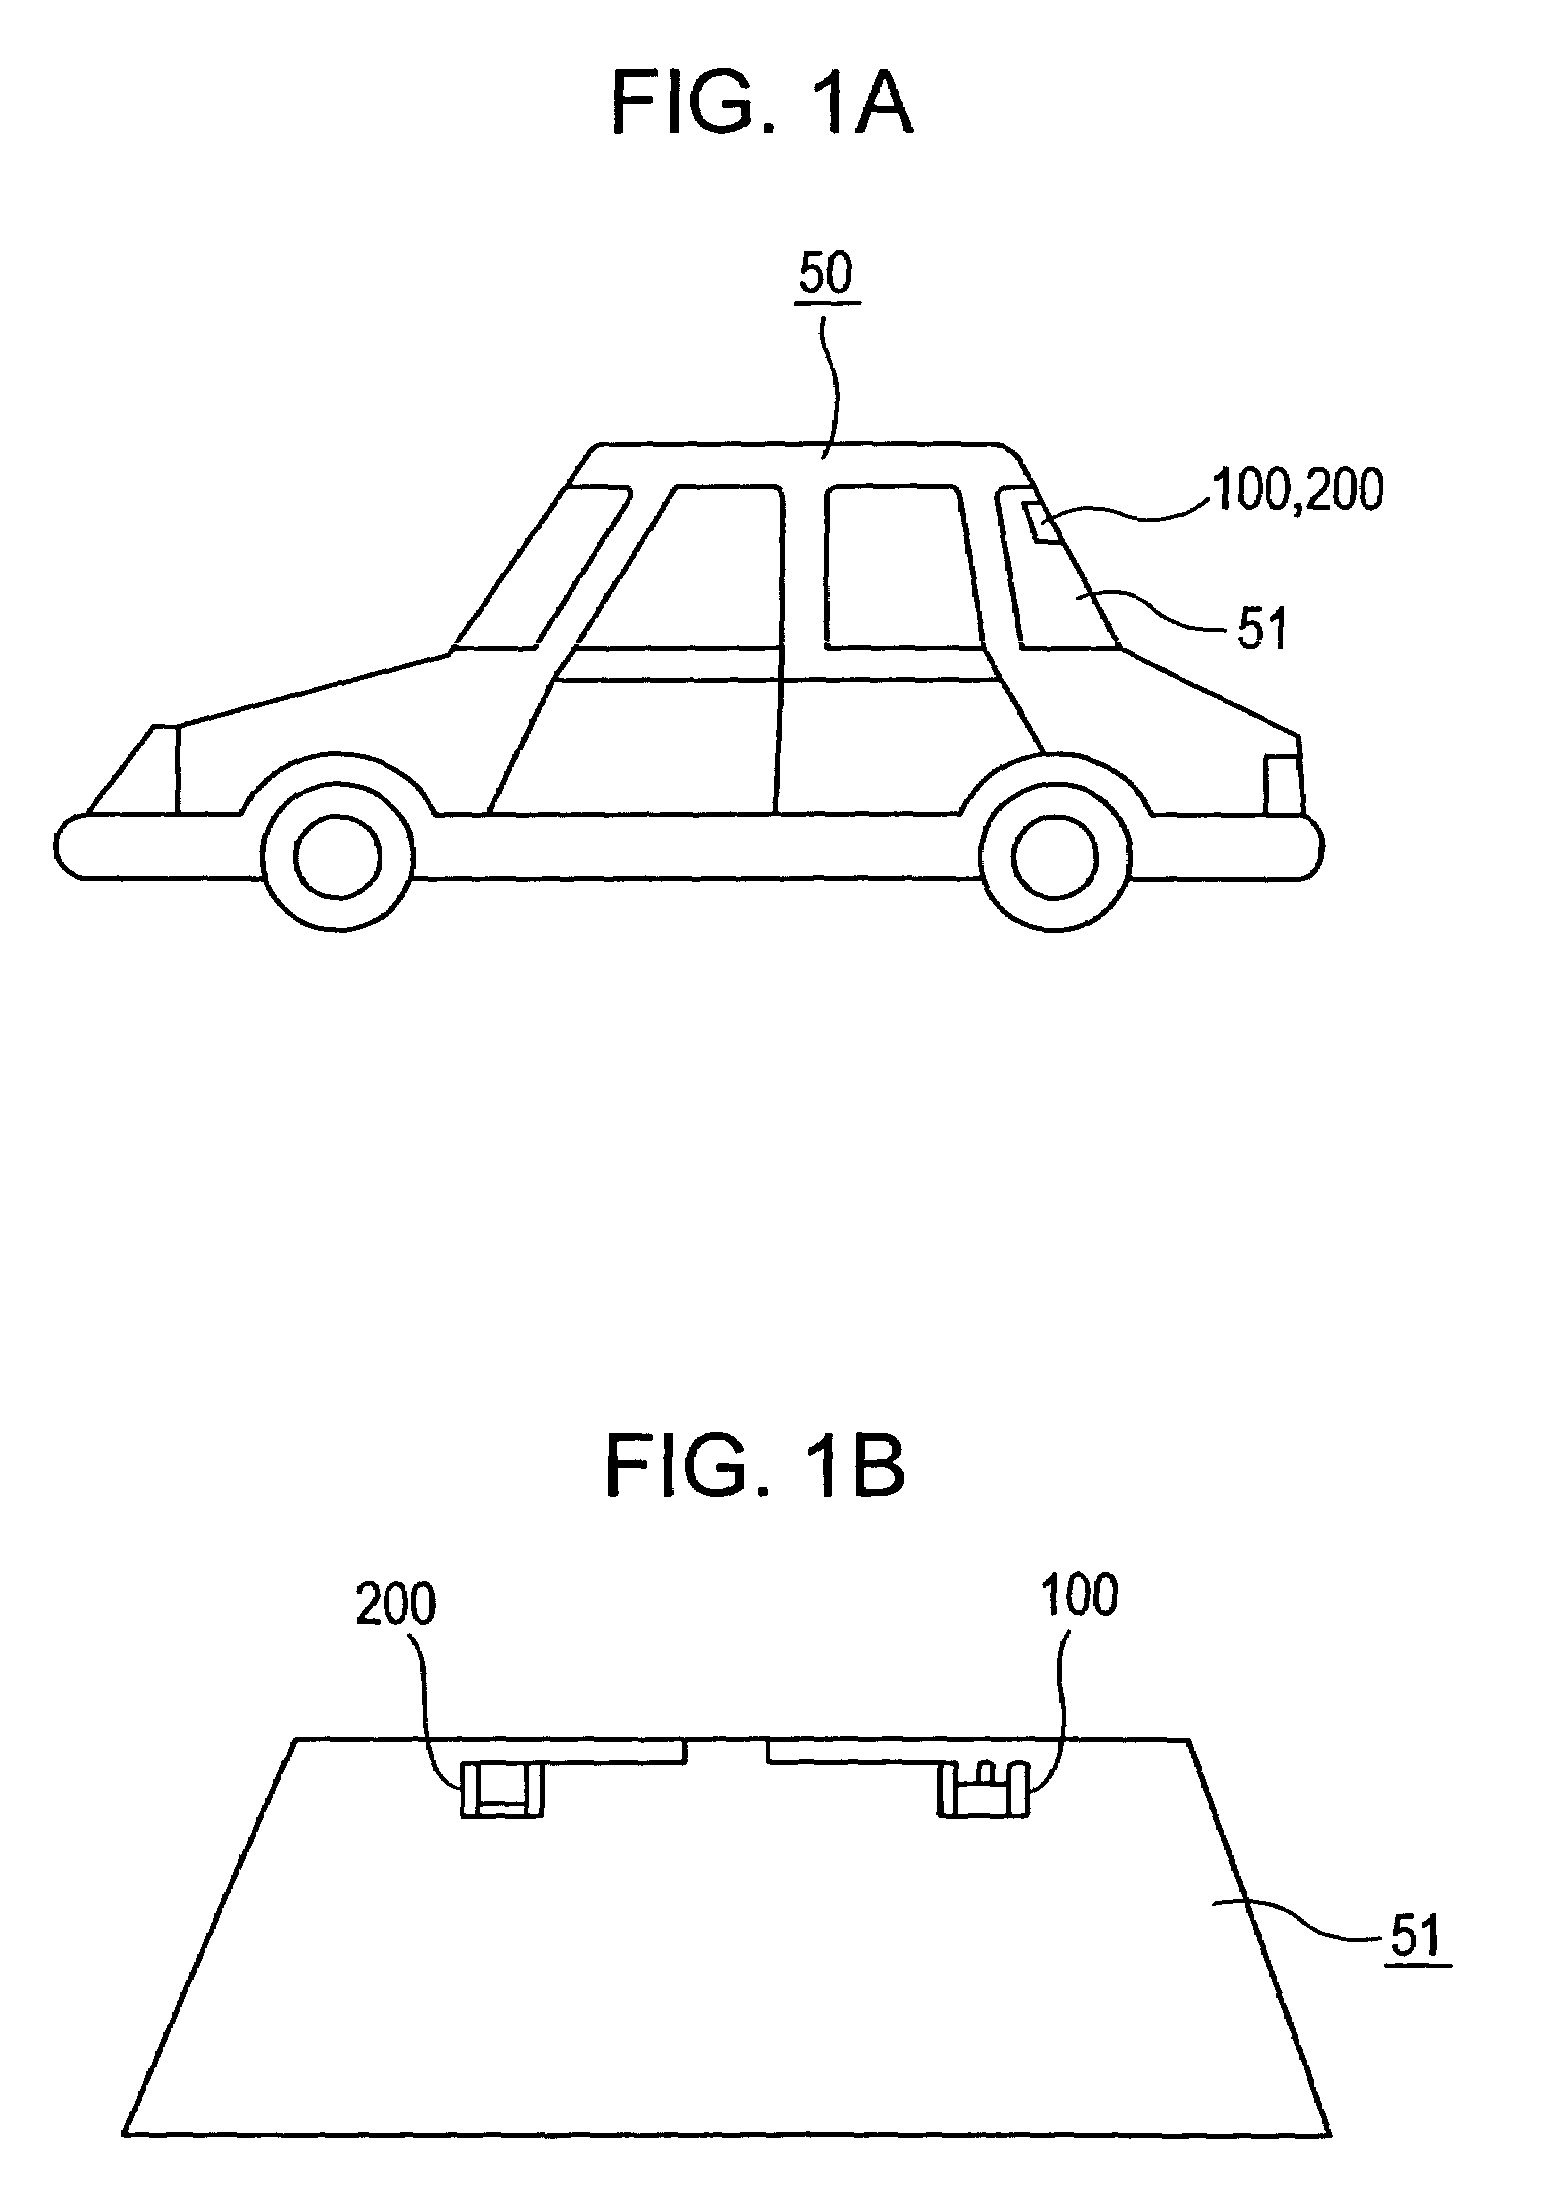 In-vehicle antenna apparatus